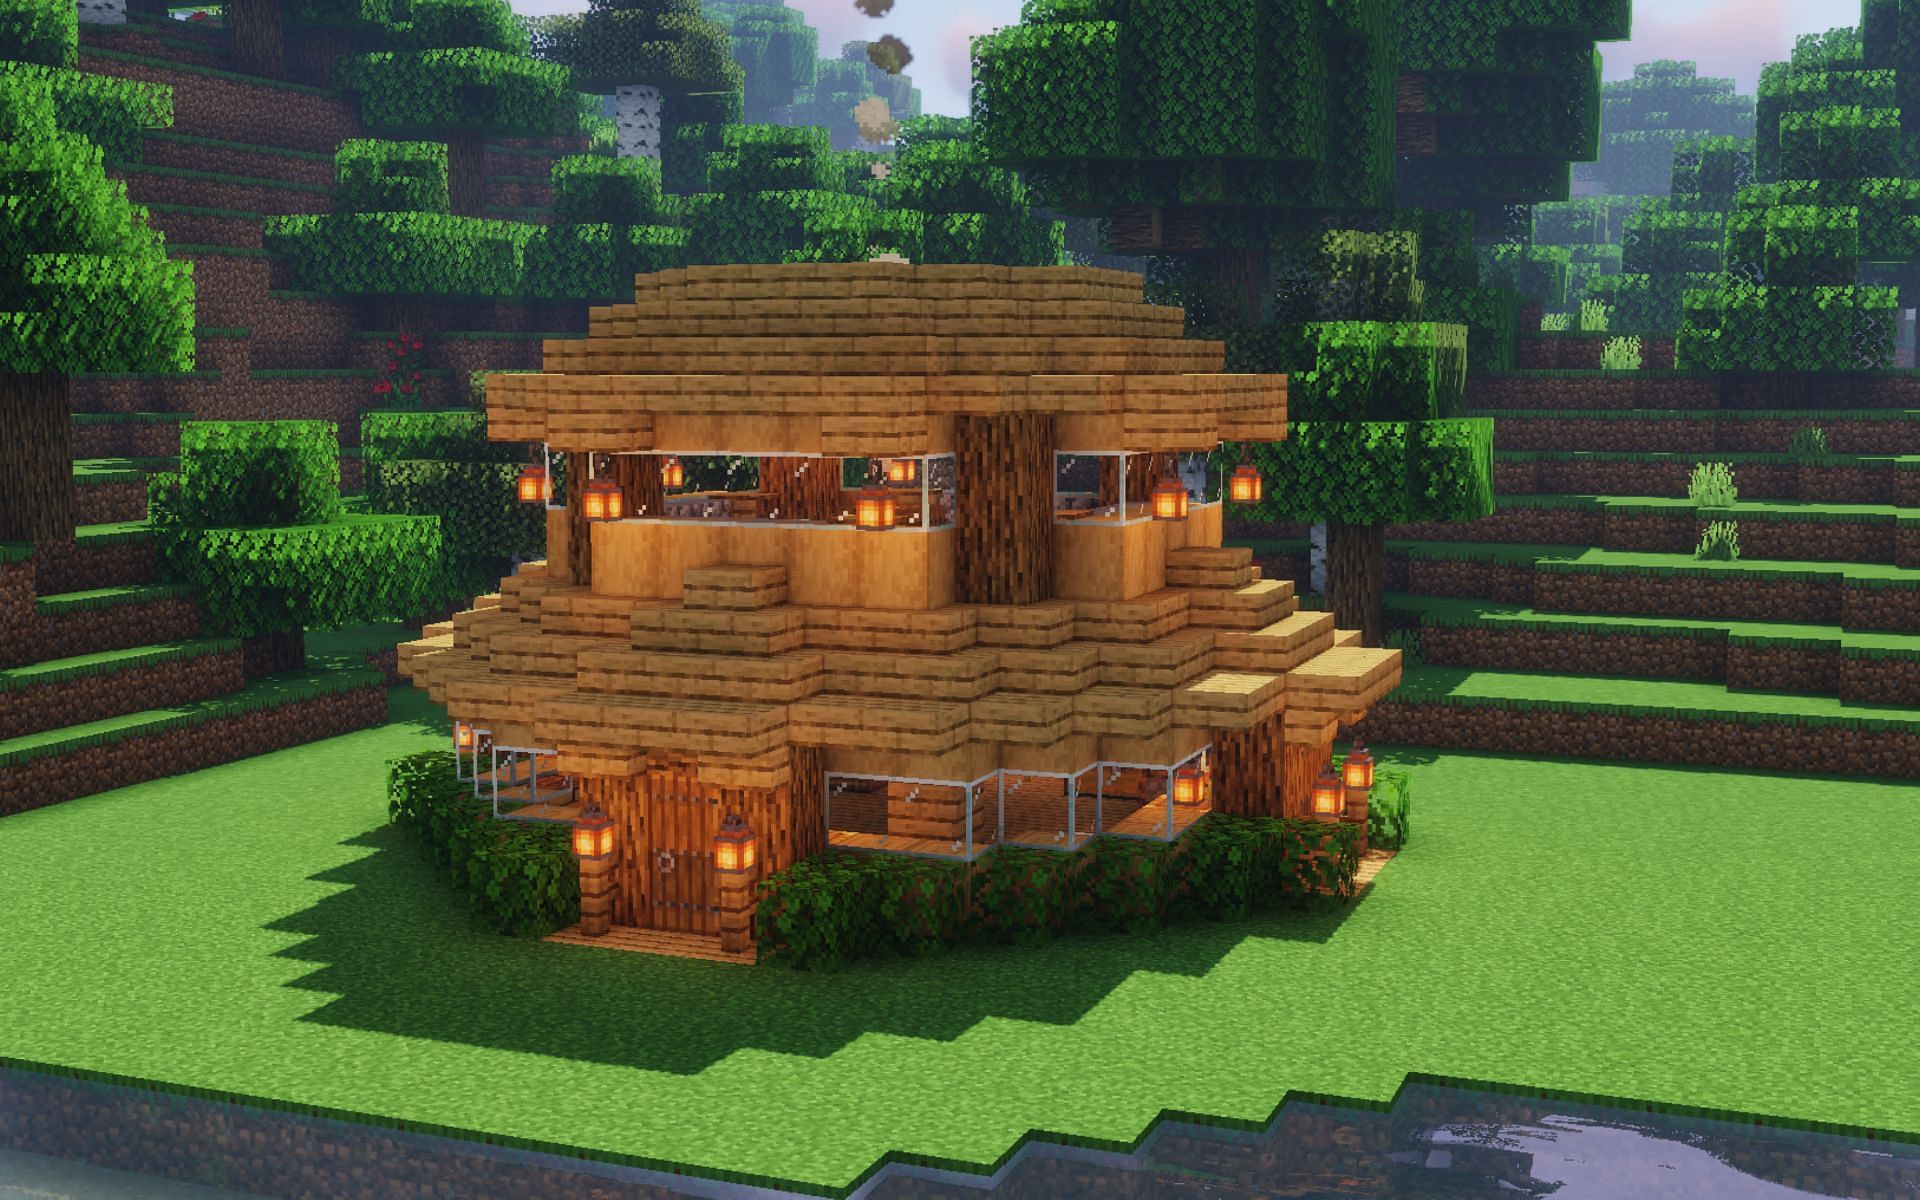 Minecraft: How to build a dark oak wooden house  Easy minecraft houses,  Minecraft houses, Minecraft houses blueprints